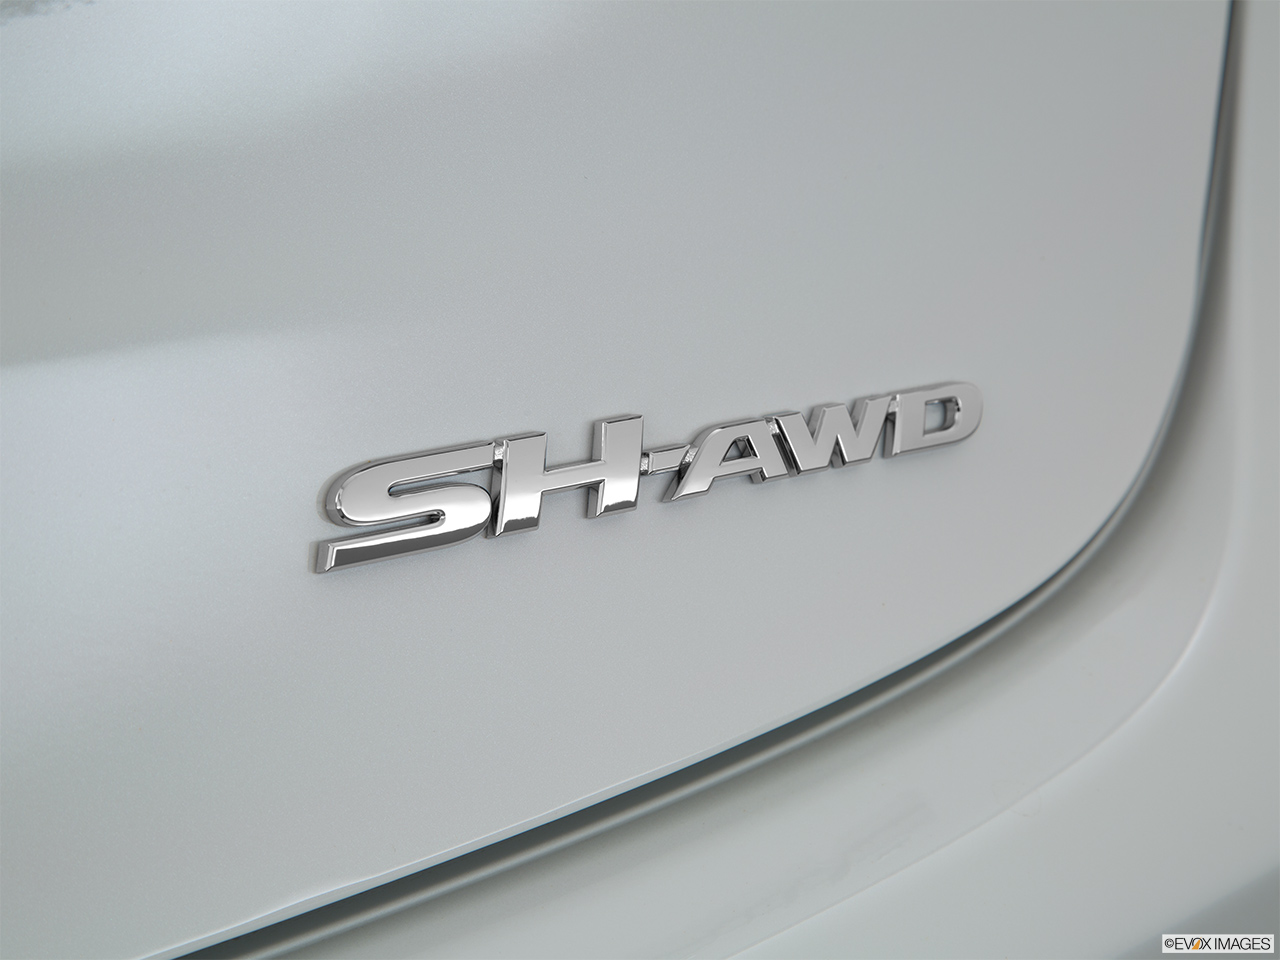 2015 Acura TLX 3.5 V-6 9-AT SH-AWD Exterior Bonus Shots (no set spec) 